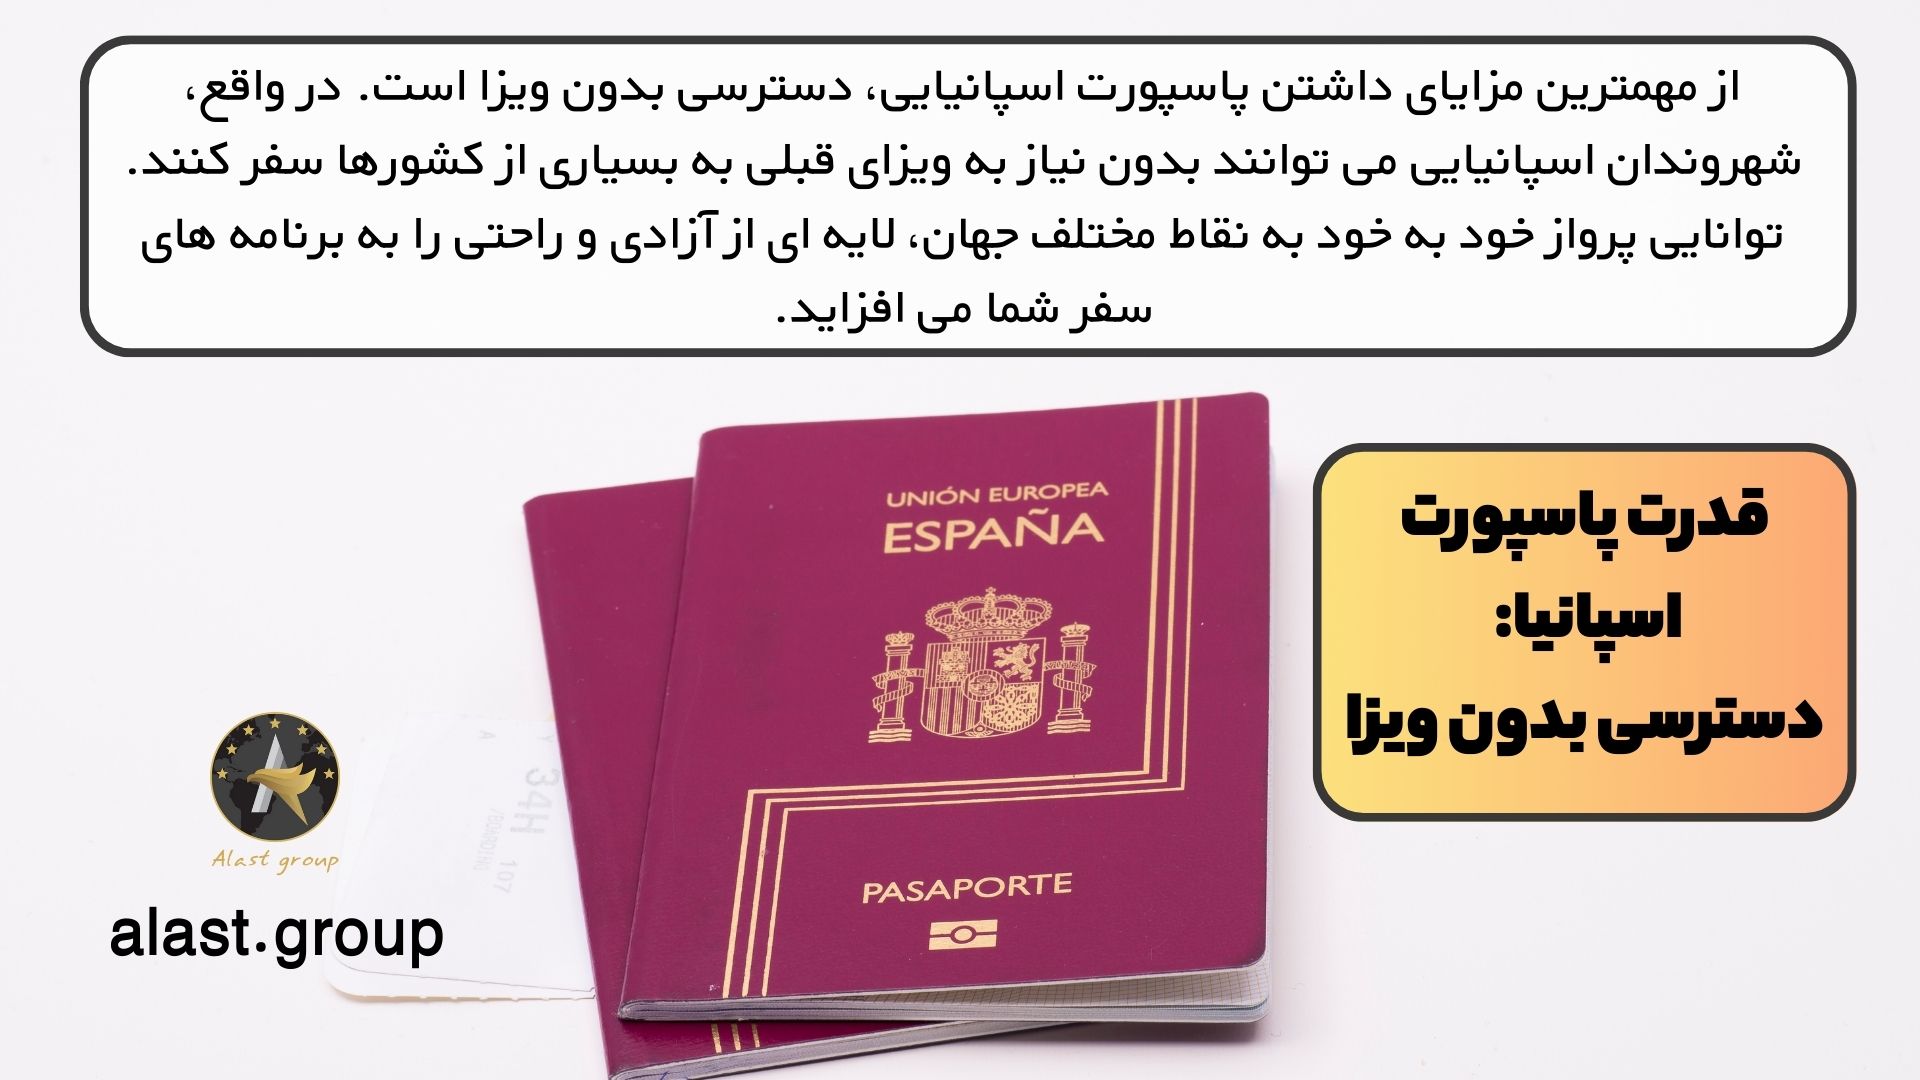 قدرت پاسپورت اسپانیا: دسترسی بدون ویزا